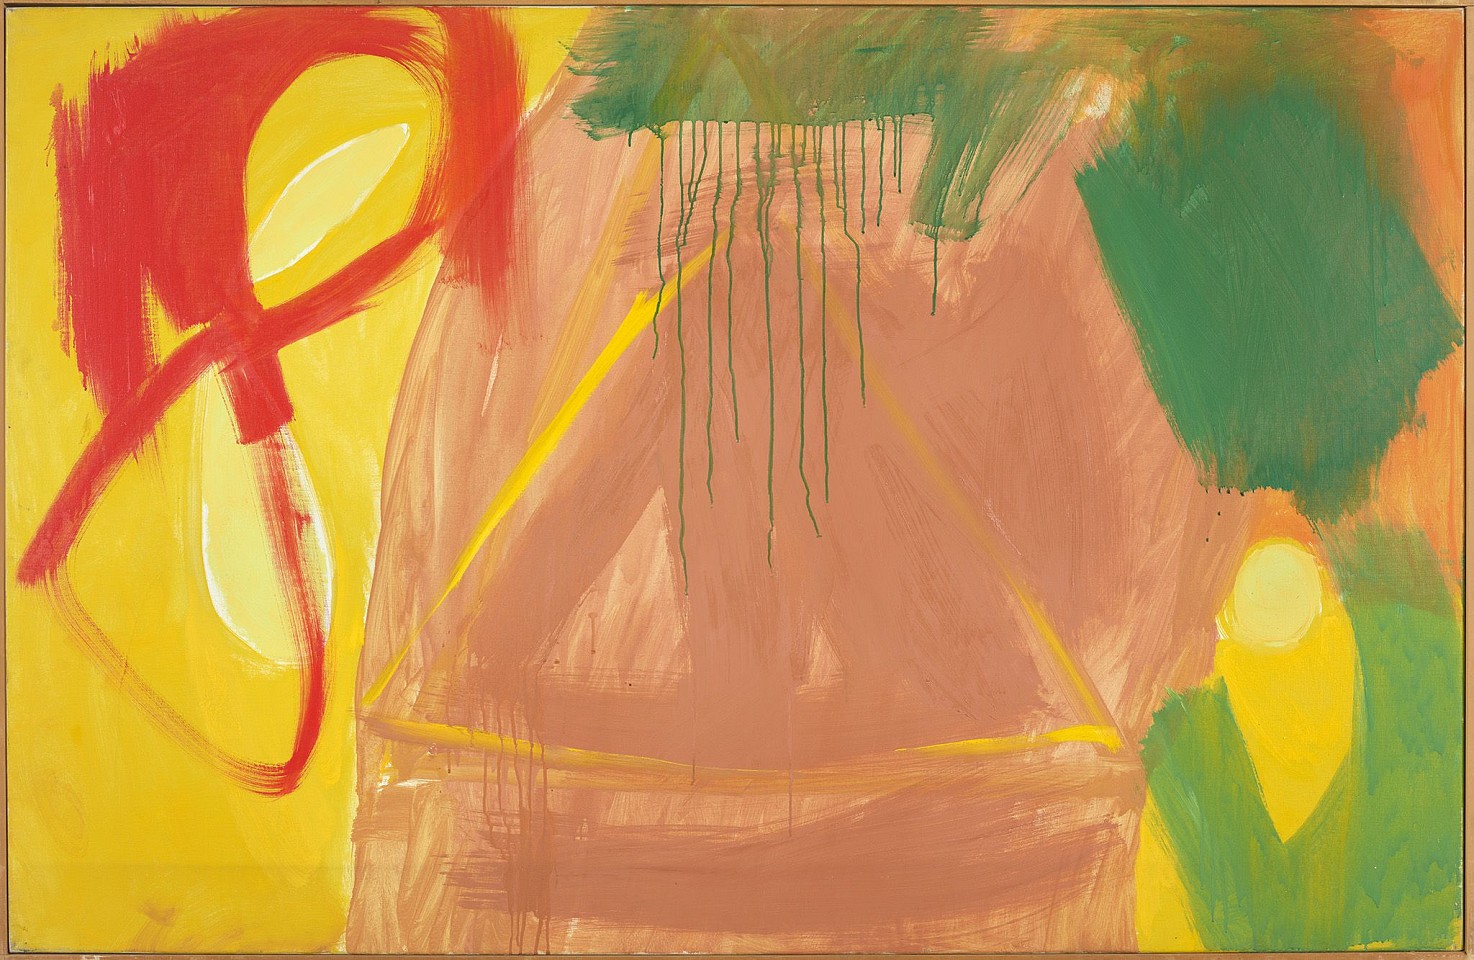 Ethel Schwabacher, Warm Rain IV, 1961
Oil on canvas, 39 x 60 in. (99.1 x 152.4 cm)
SCHW-00034